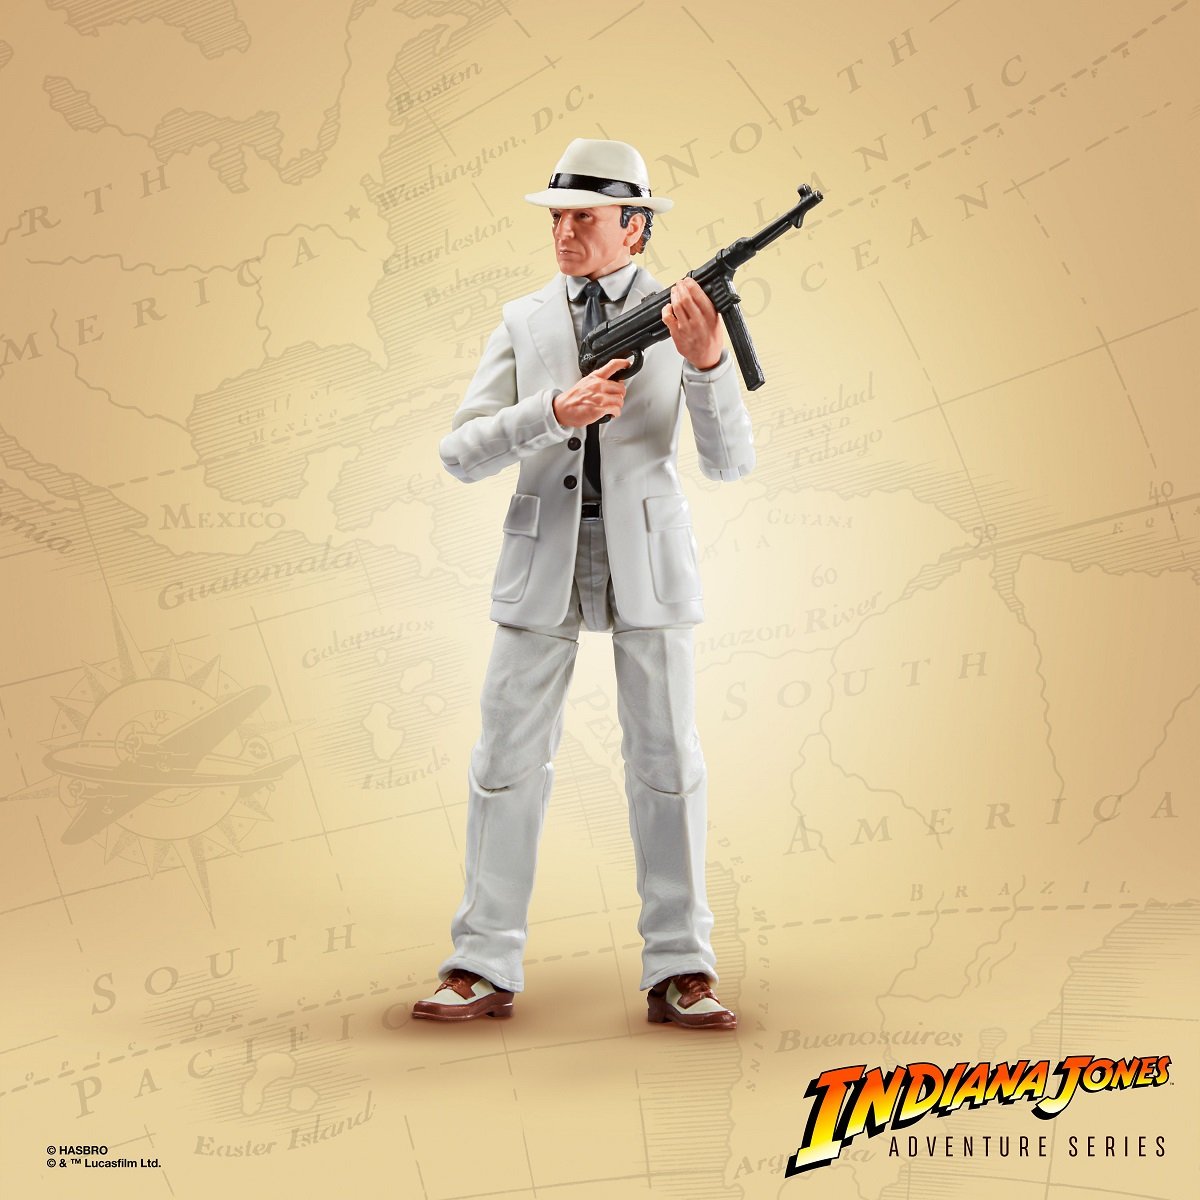 René Belloq figure with machine gun from Raiders of the Lost Ark, part of Hasbro's Indiana Jones Adventure Series.